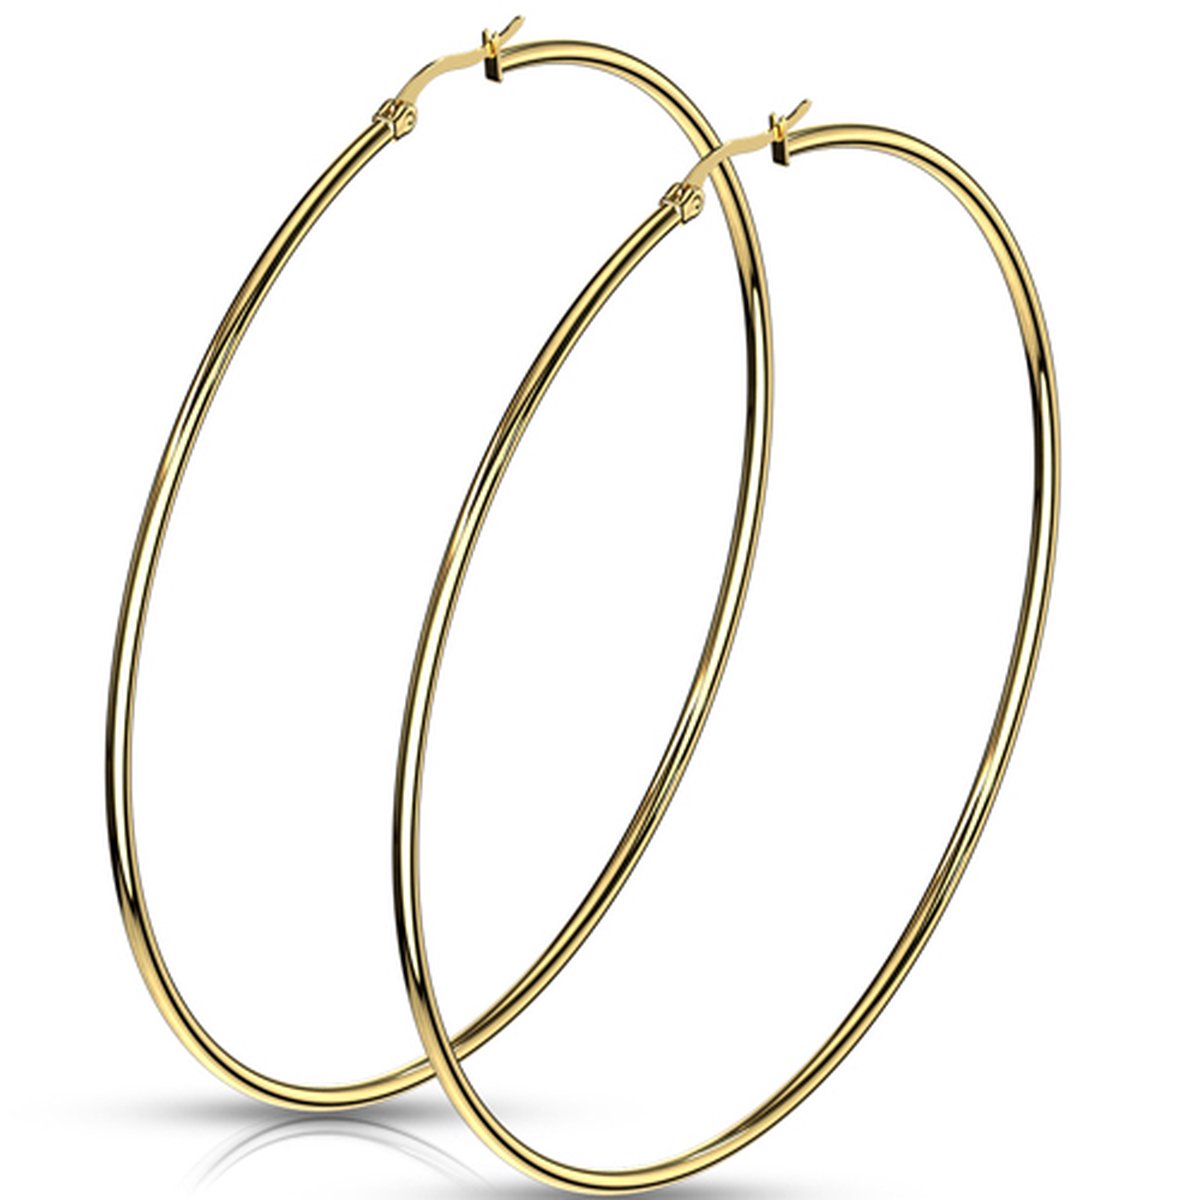 Oorbellen gold plated ringen 75mm ©LMPiercings - LMPiercings NL